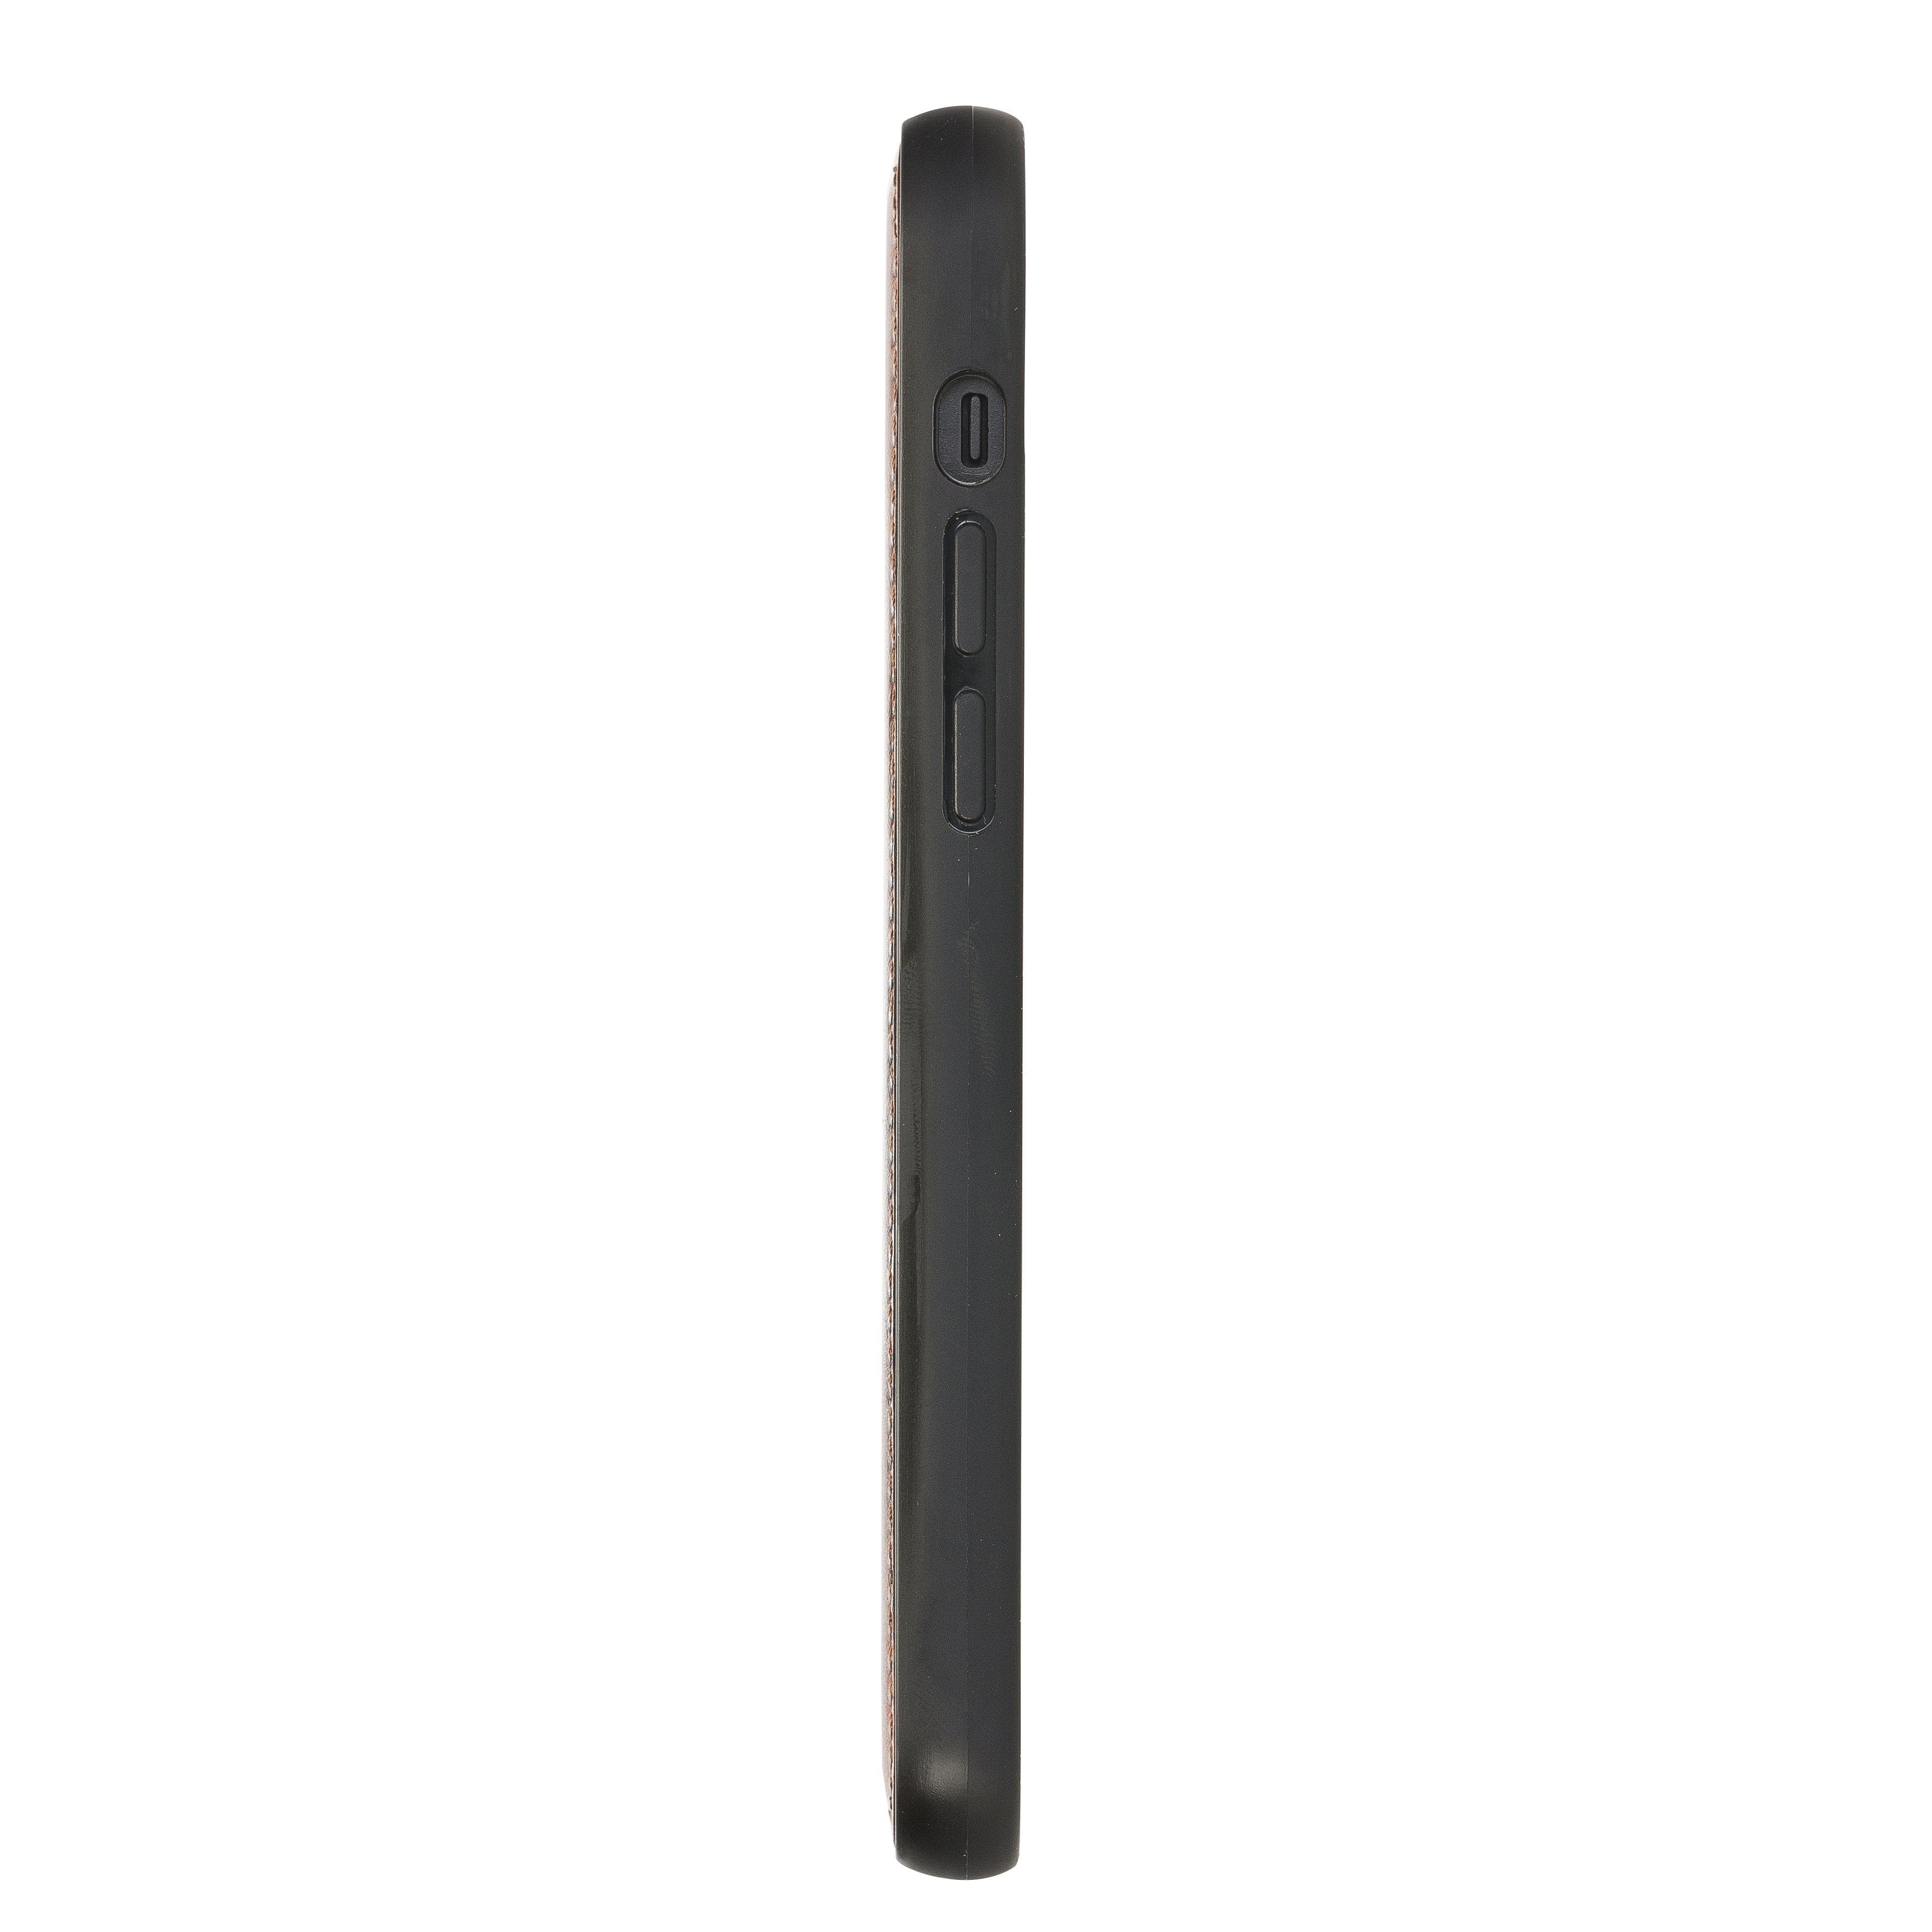 B2B - Apple iPhone 12 Pro Max Leather Case / FXC - Flex Cover Back Bouletta B2B